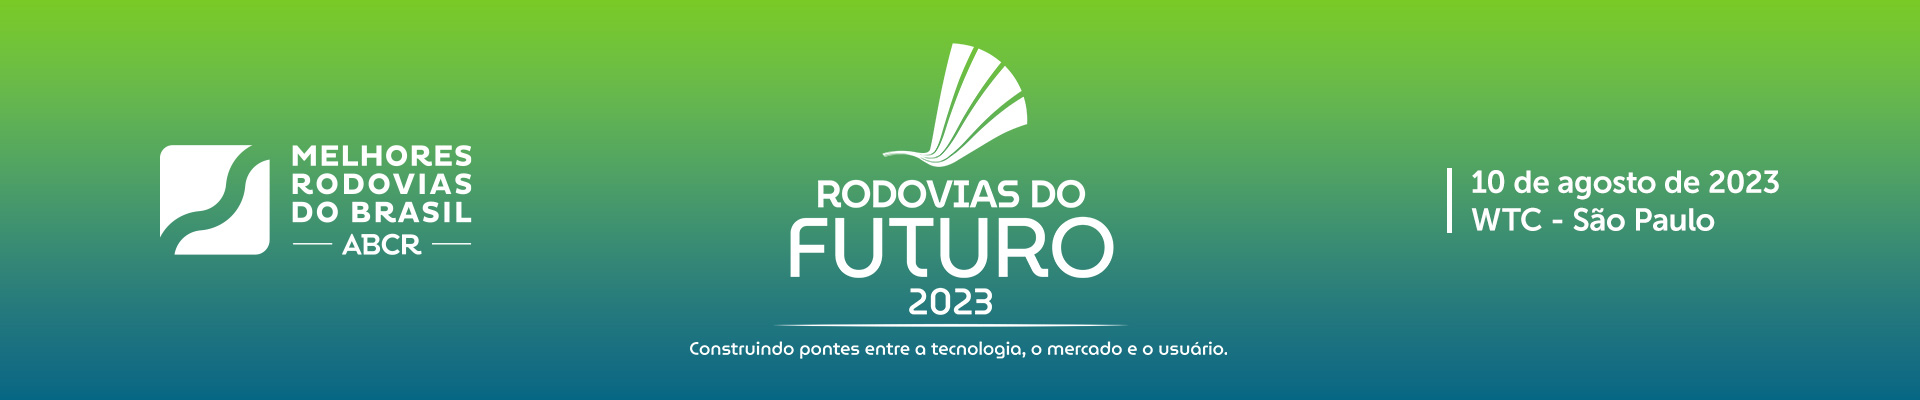 Rodovias do Futuro 2023